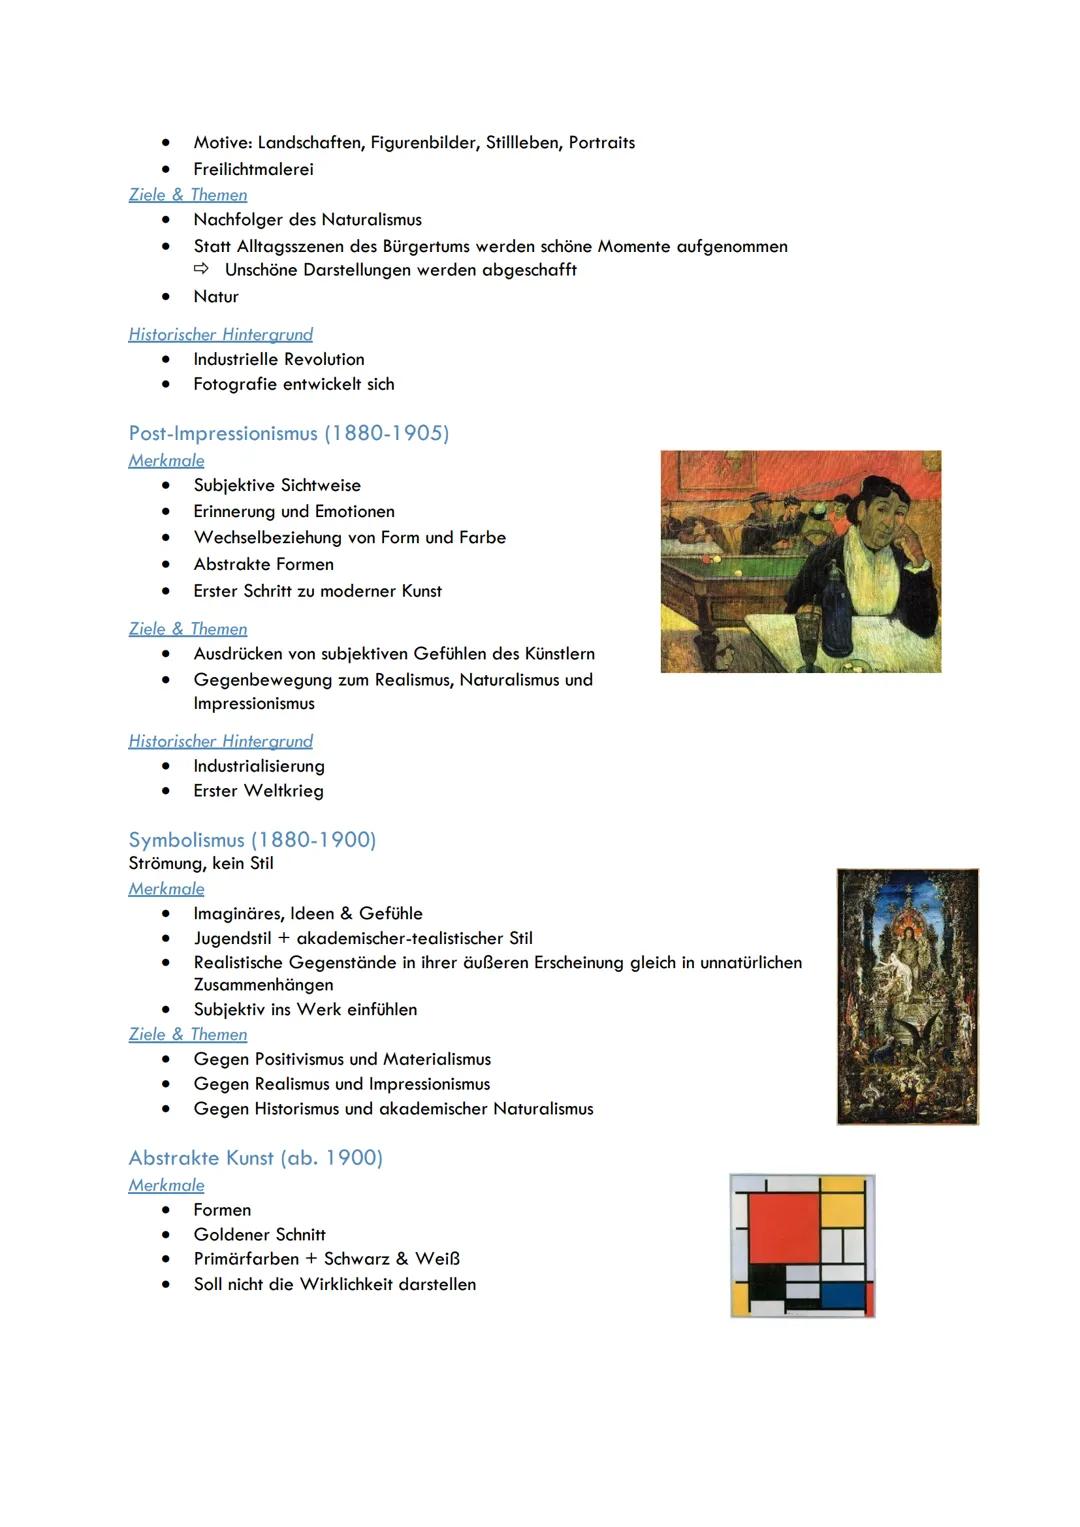 Kunst Q1
Epochen
Renaissance (1400-1600),
Barock (1570-1750)
Klassizismus (1760-1830)
Romantik (1800-1840)
Realismus (1830-1880)
Impressioni